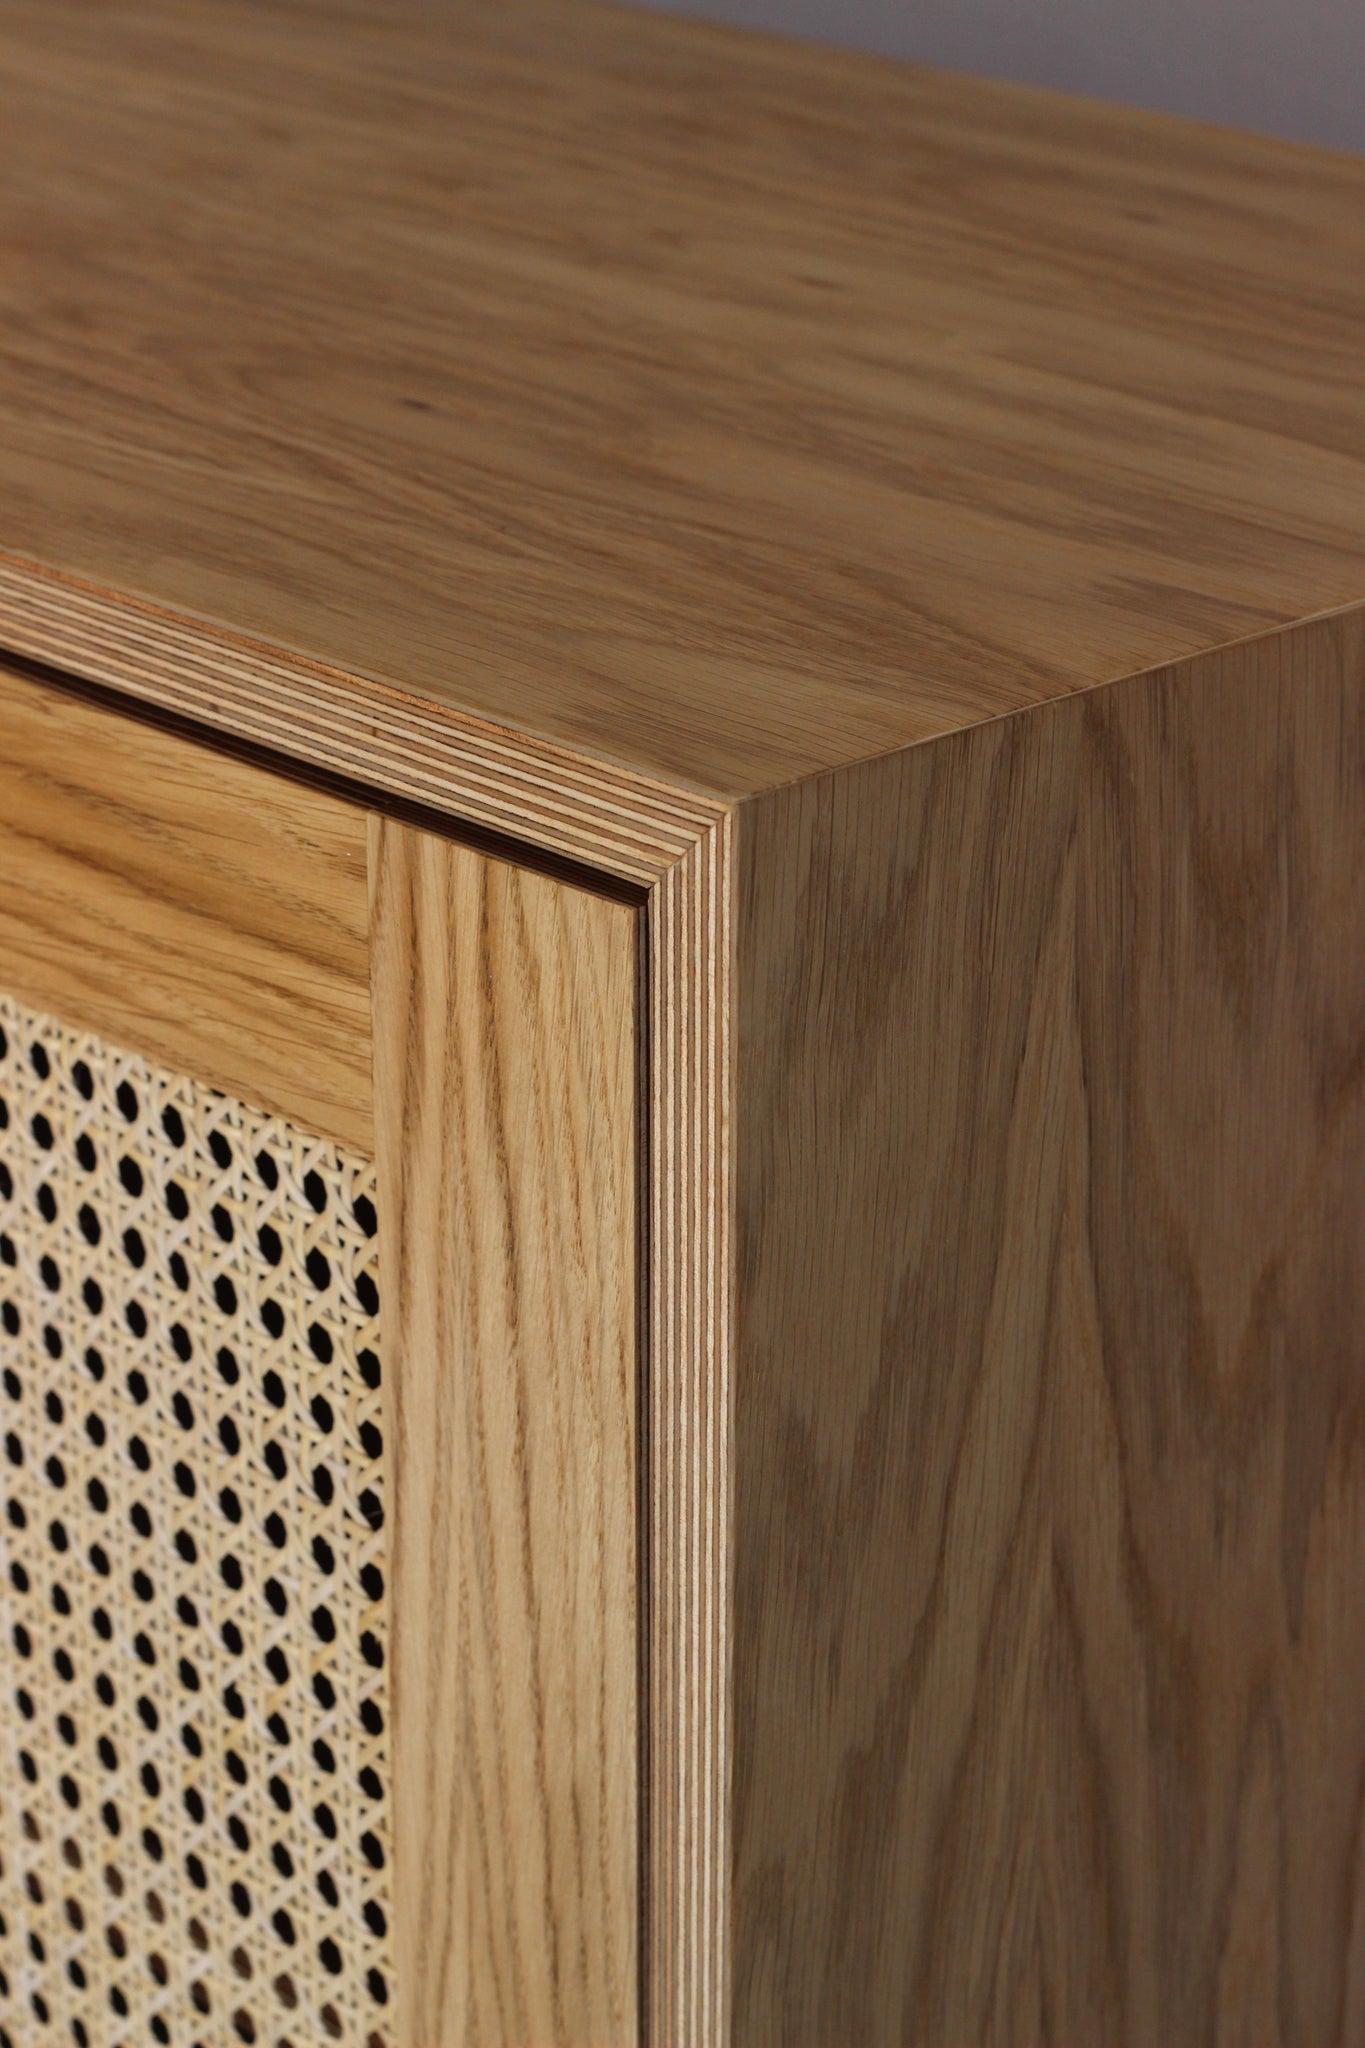 Handmade woven cabinet. It features oak veneered ply with solid oak legs. Made by Jon Grant in Leyton, East London.